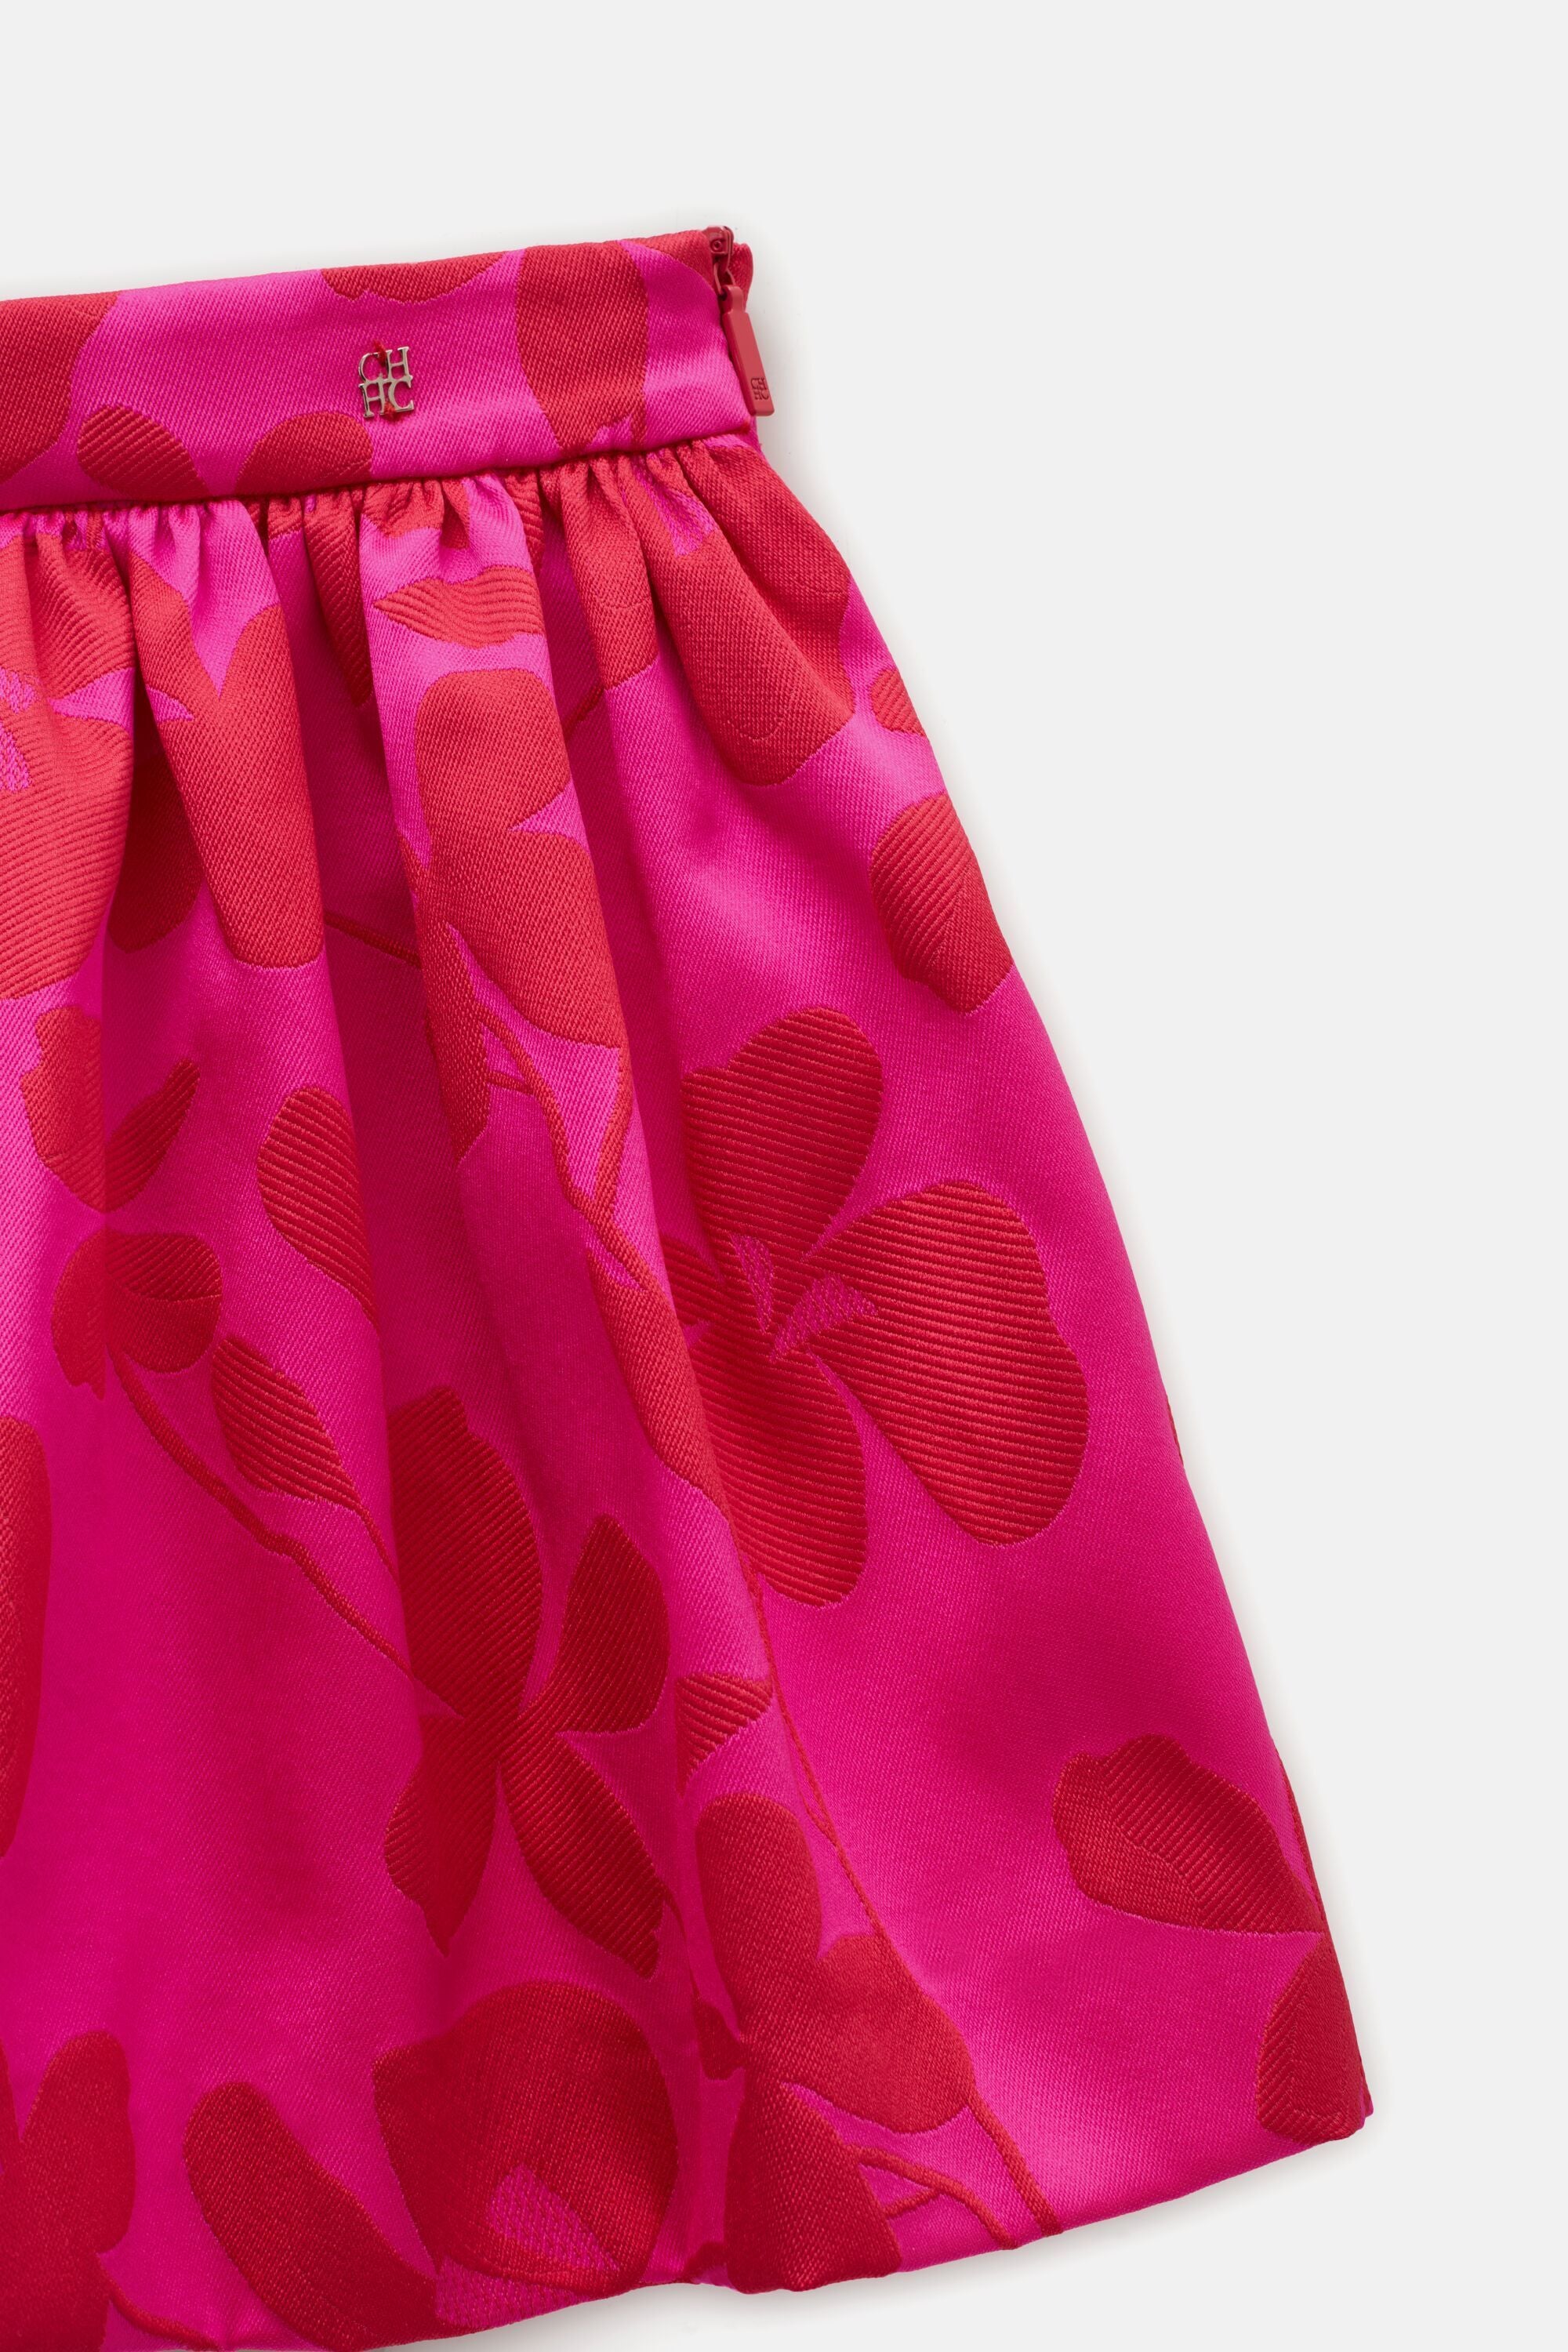 Buy Sizzling Golden Banarasi Top N Magenta Brocade Skirt